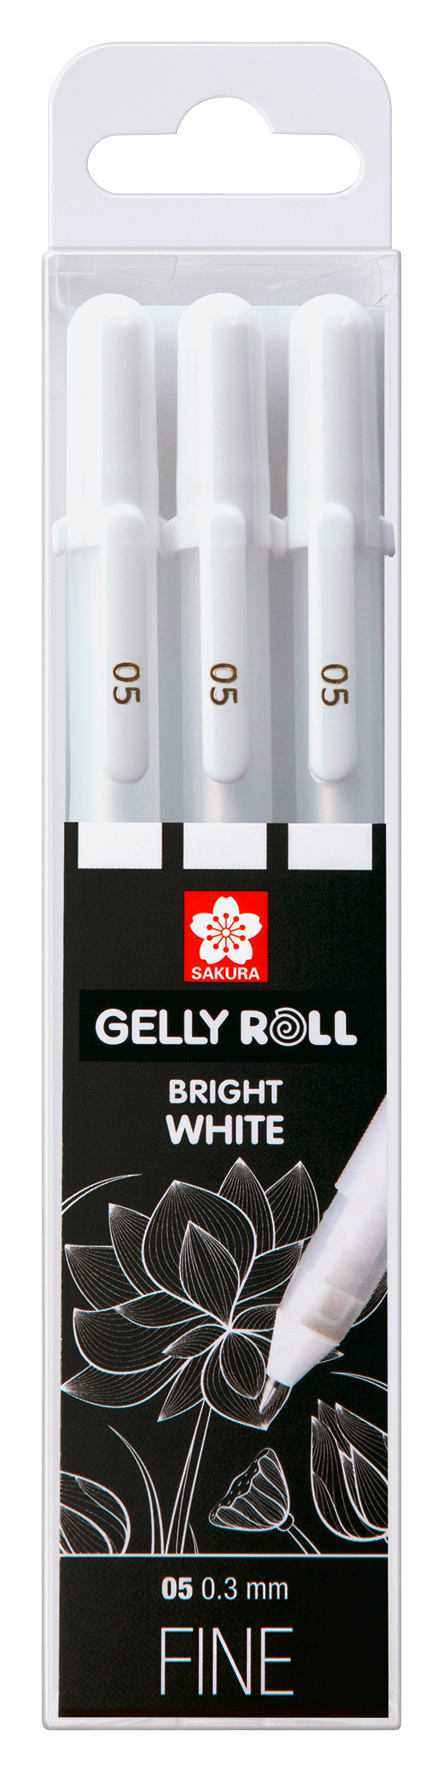 SAKURA Gelly Roll 0.3mm POXPGBWH3A White 3 pcs. White 3 pcs.